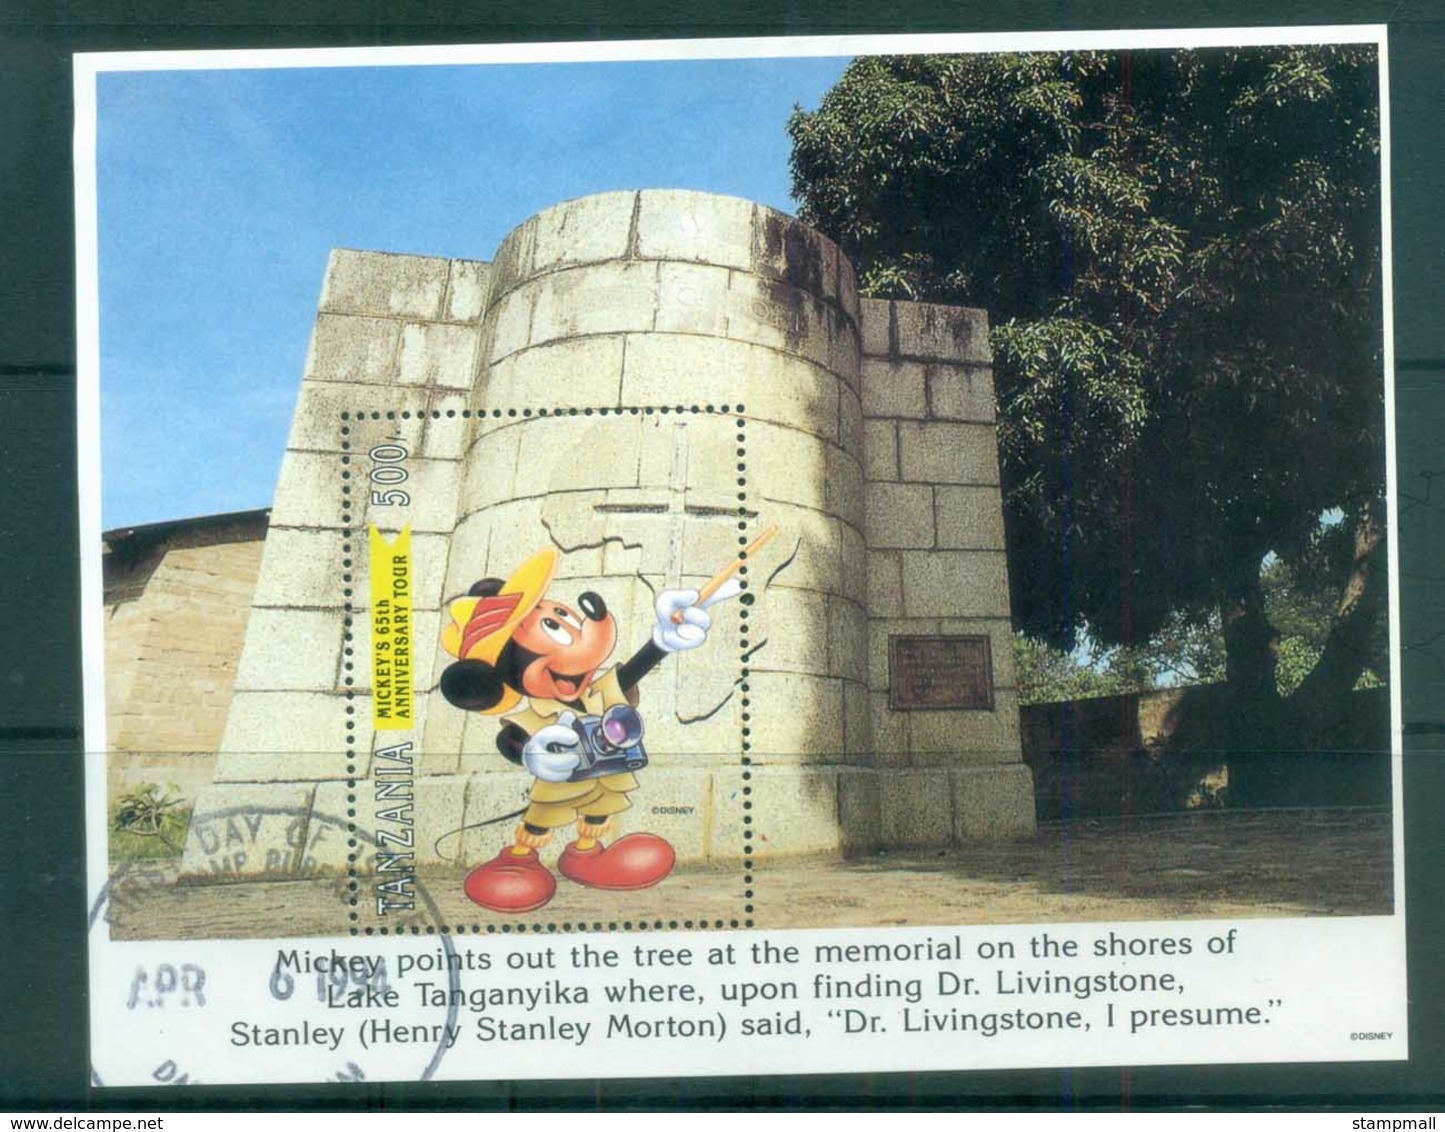 Tanzania 1994 Disney, Disney Characters On Tour, Dr Livingstone MS FU Lot80101 - Swaziland (1968-...)